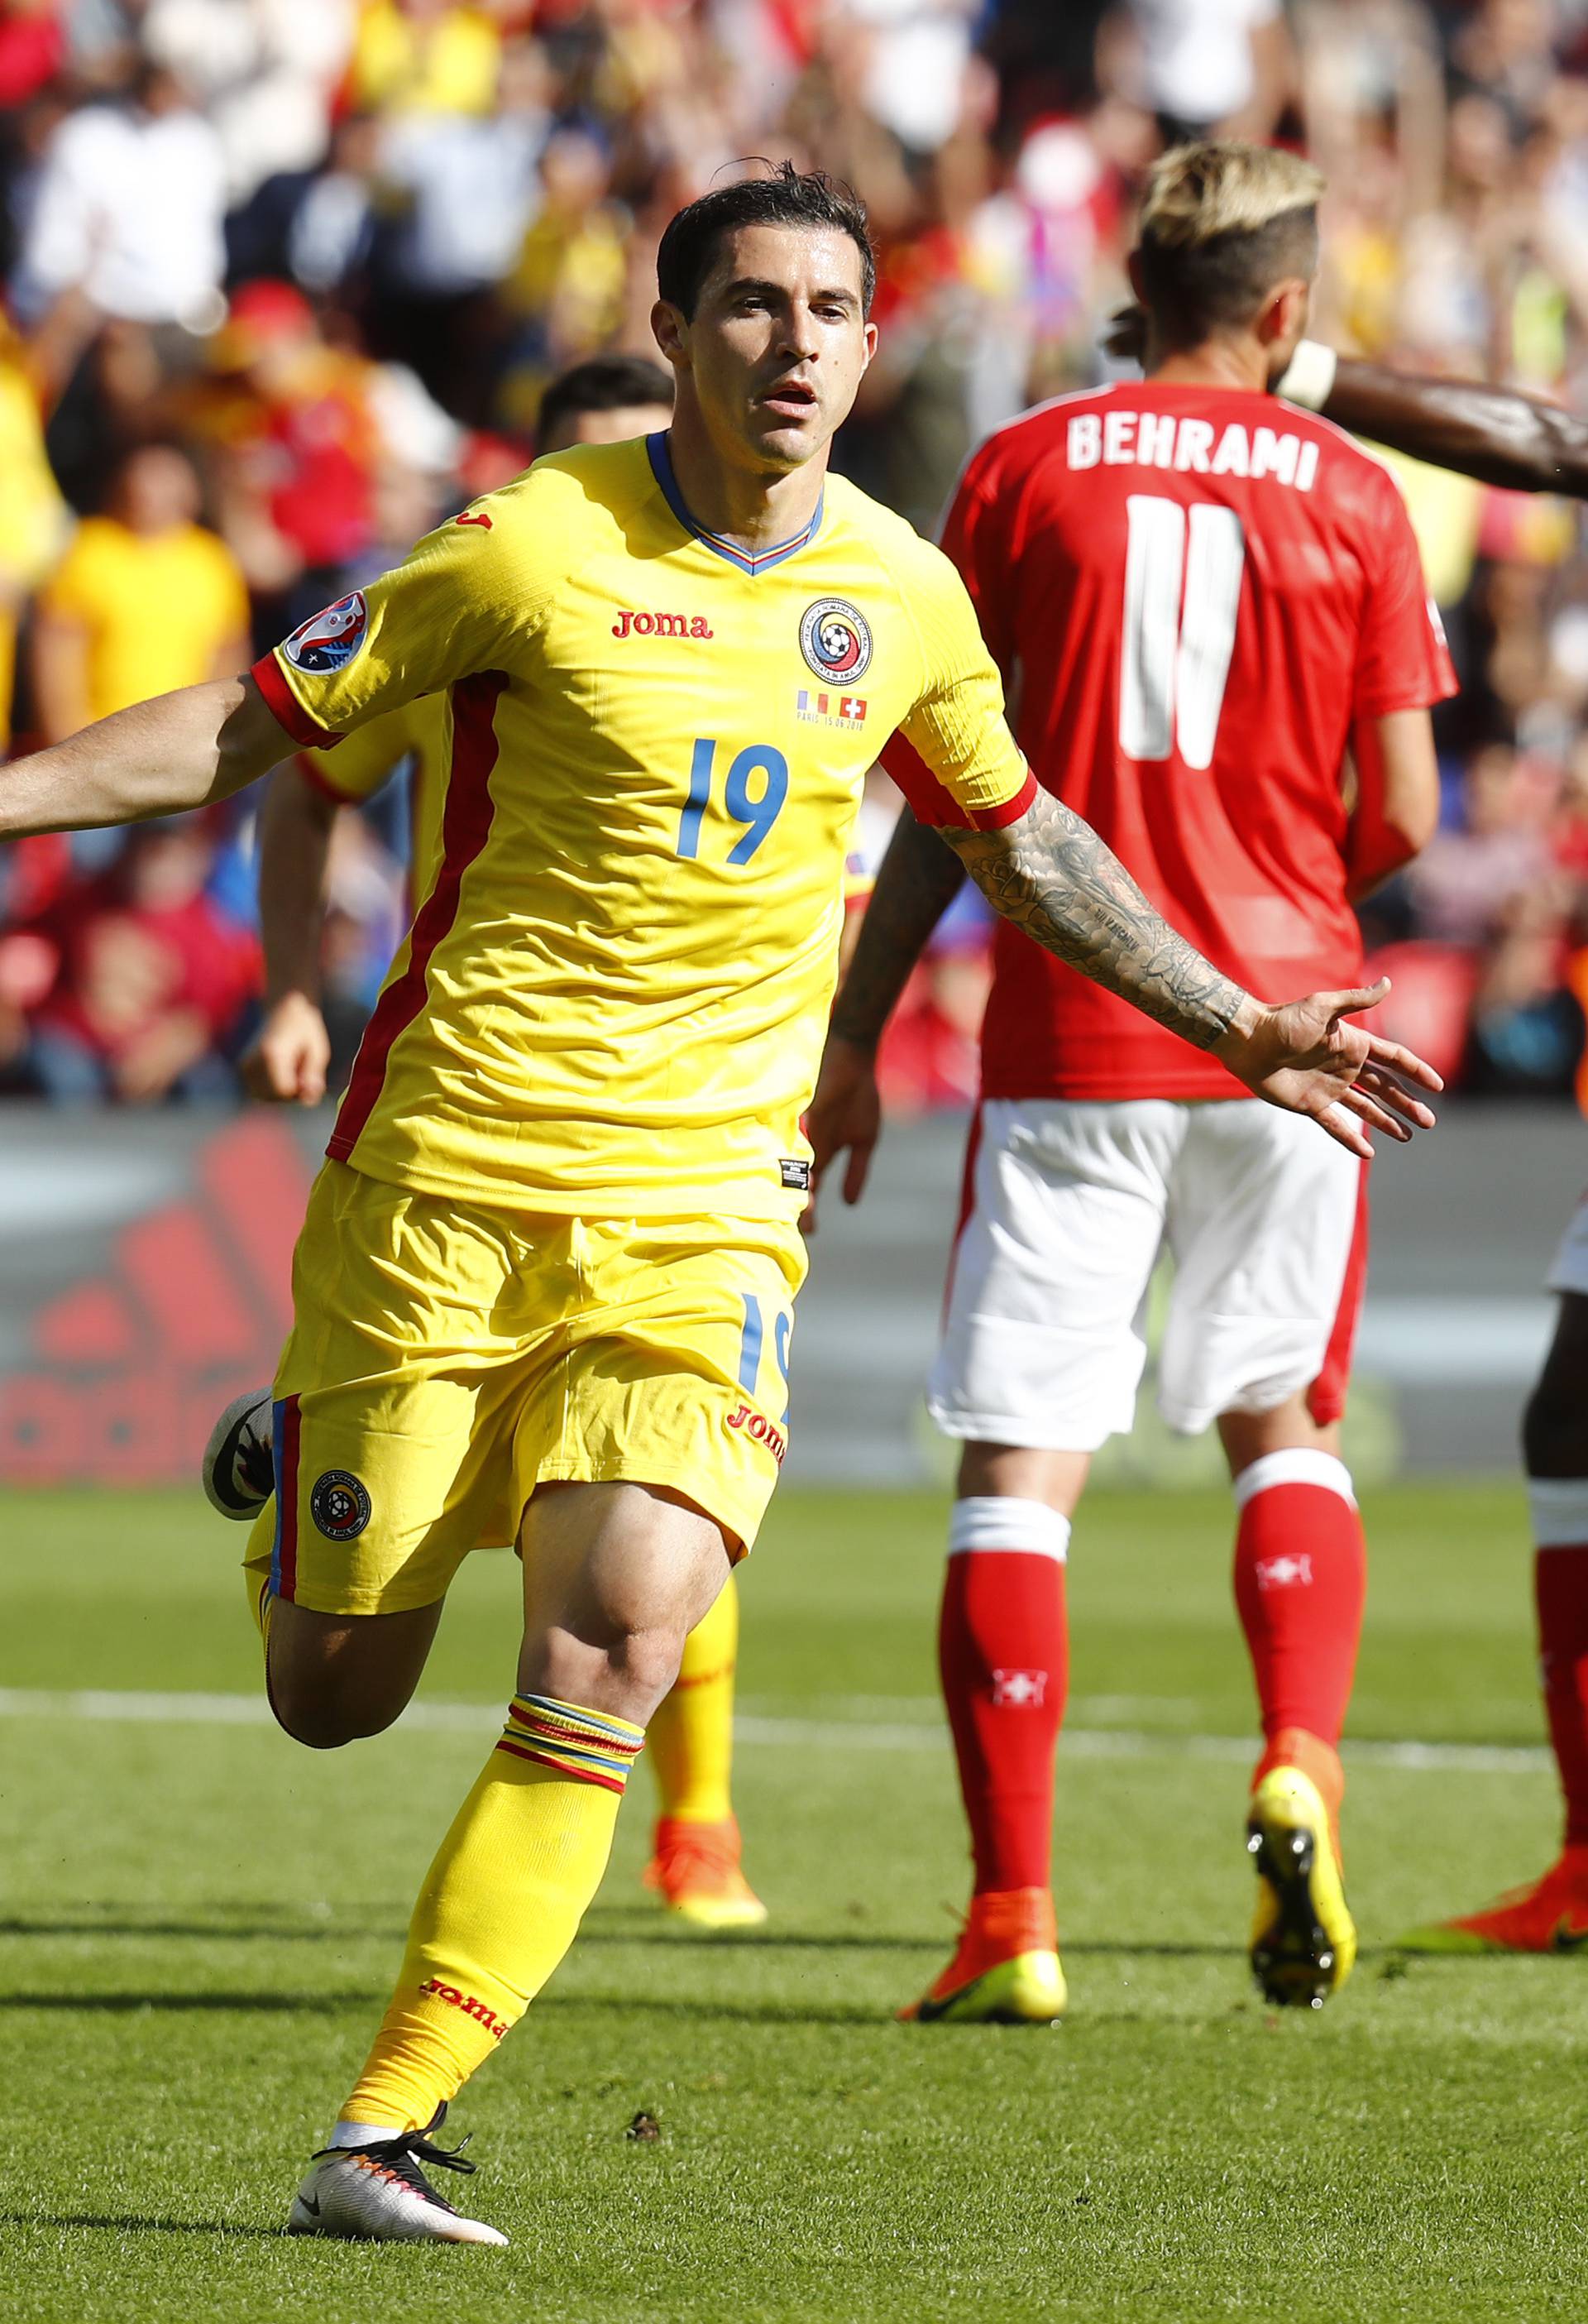 Romania v Switzerland - EURO 2016 - Group A